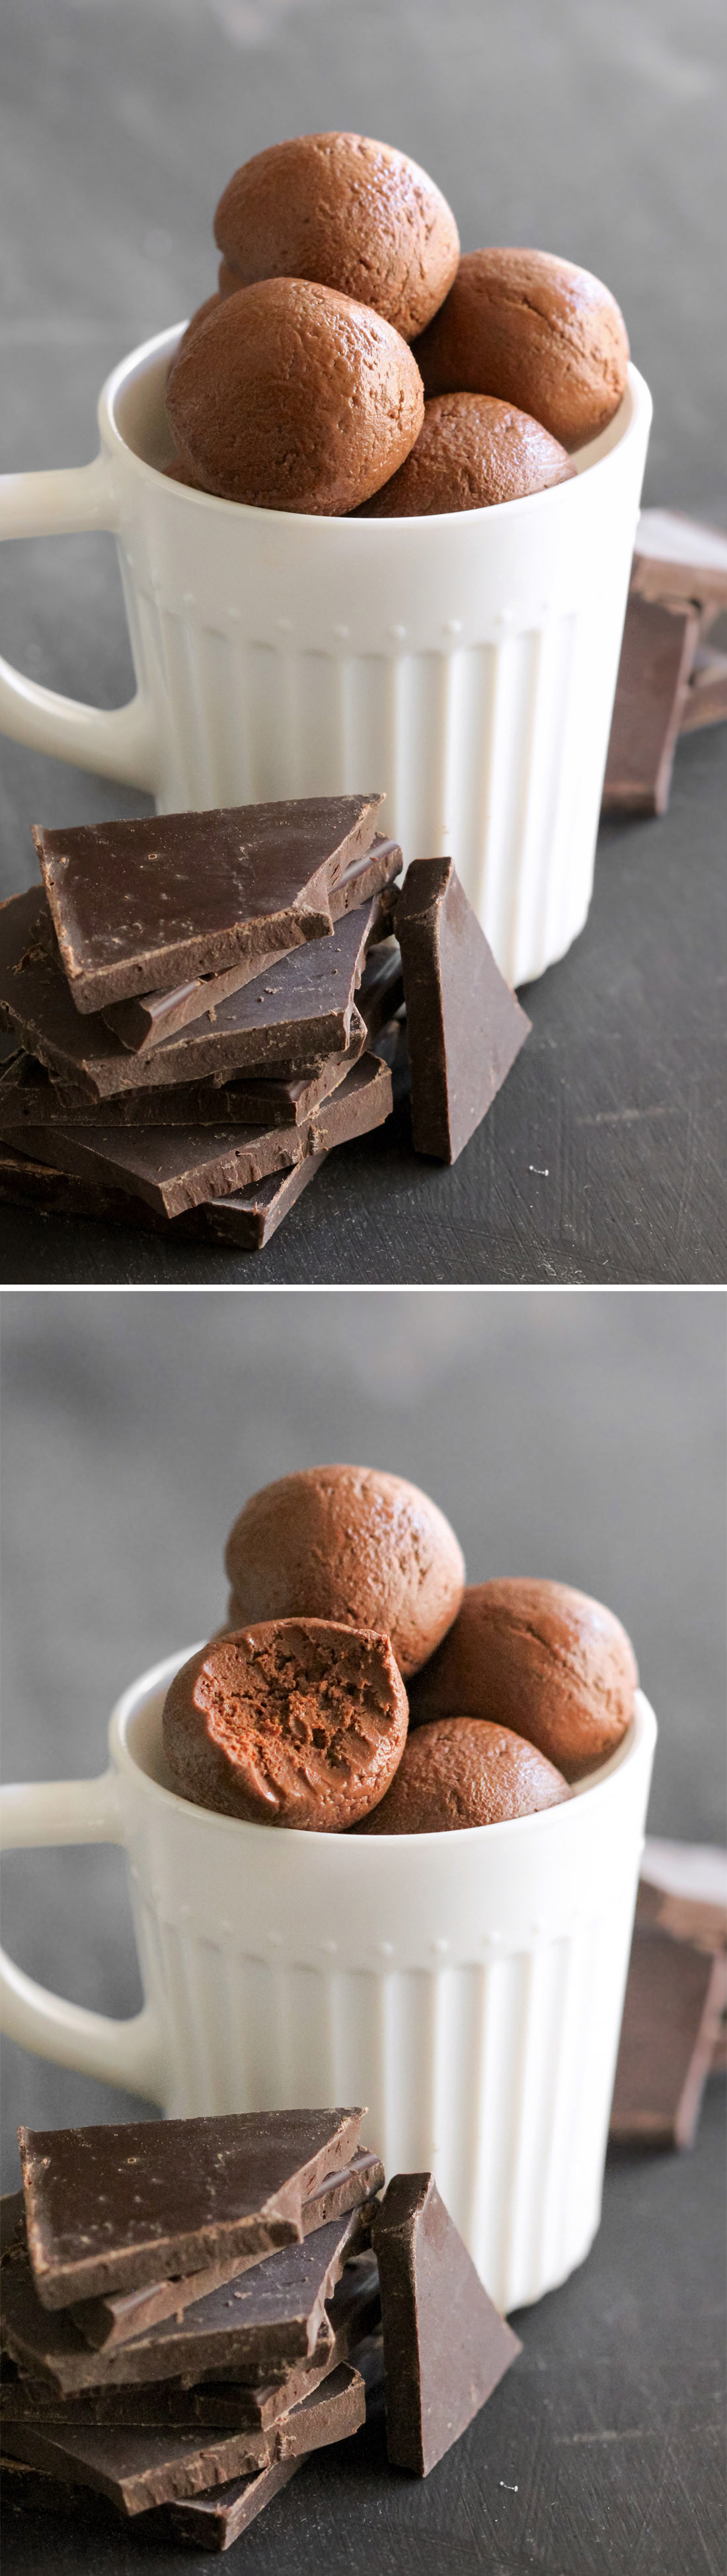 Healthy Chocolate Desserts
 Healthy Chocolate Fudge Truffles Recipe